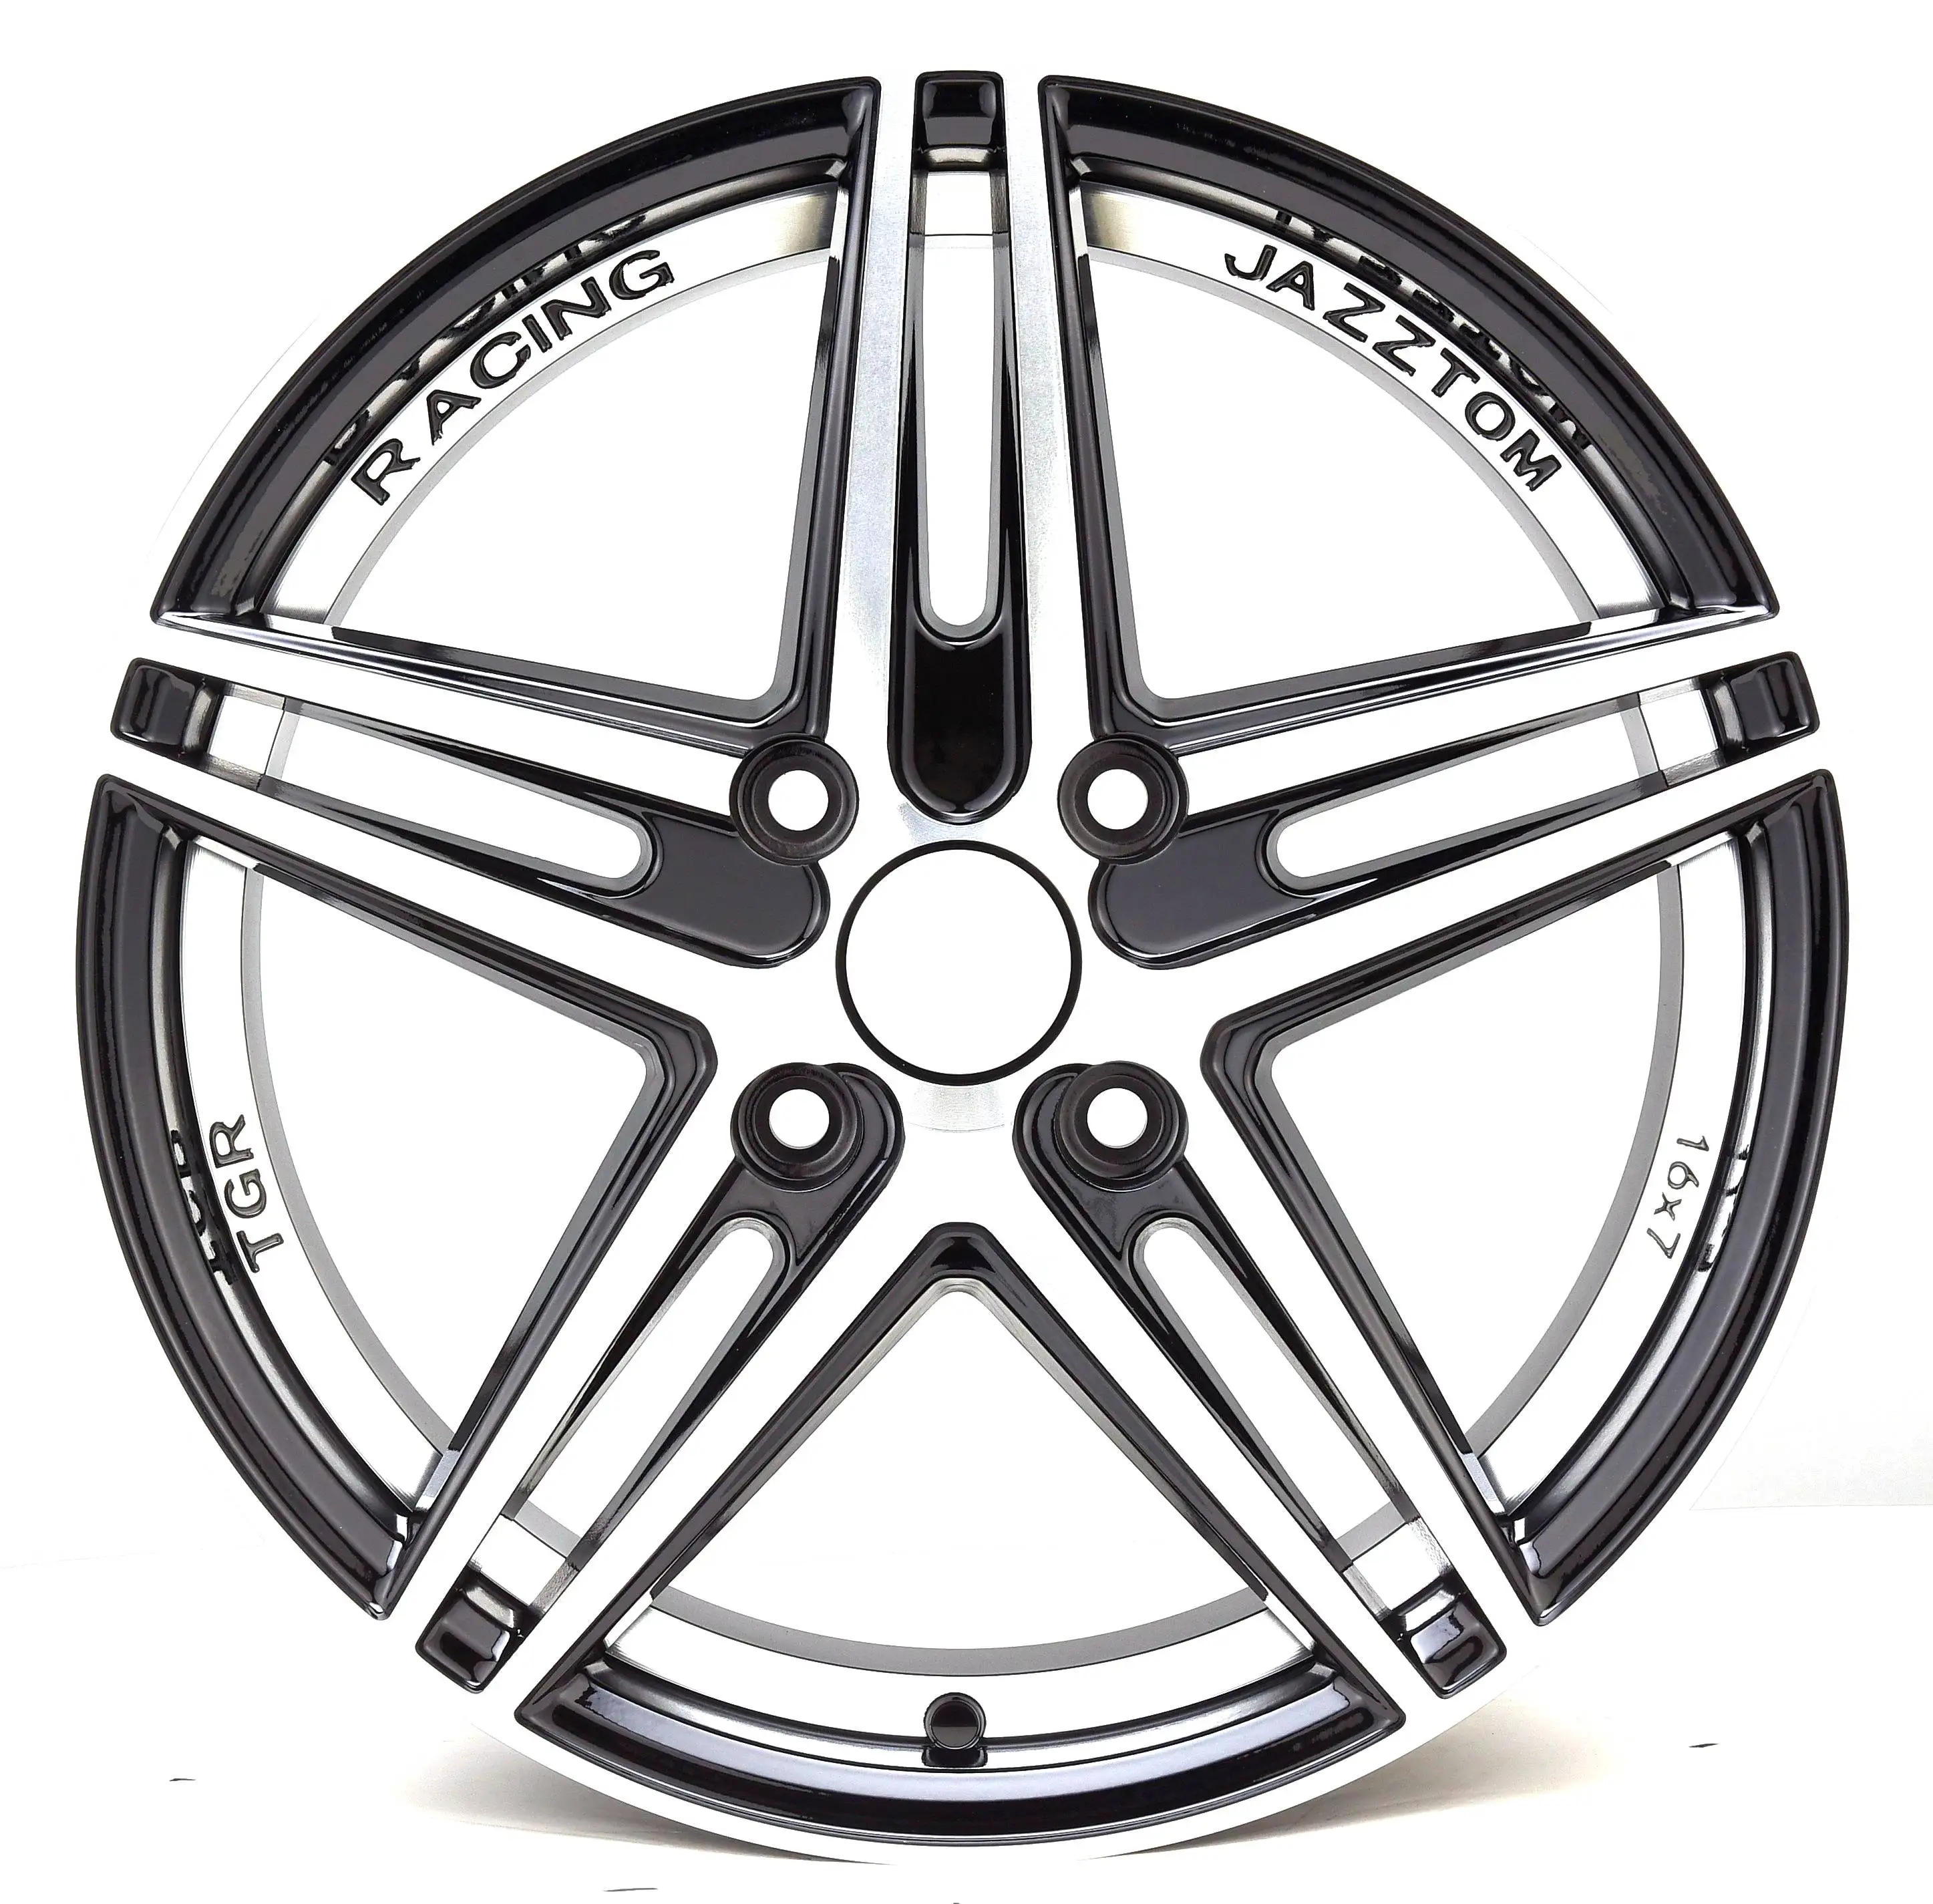 

High quality 14 15 16 17inch alloy wheel rims with pcd 4x100 5x100 4x114.3 5x114.3 5x120 aluminium car wheels aftermarket